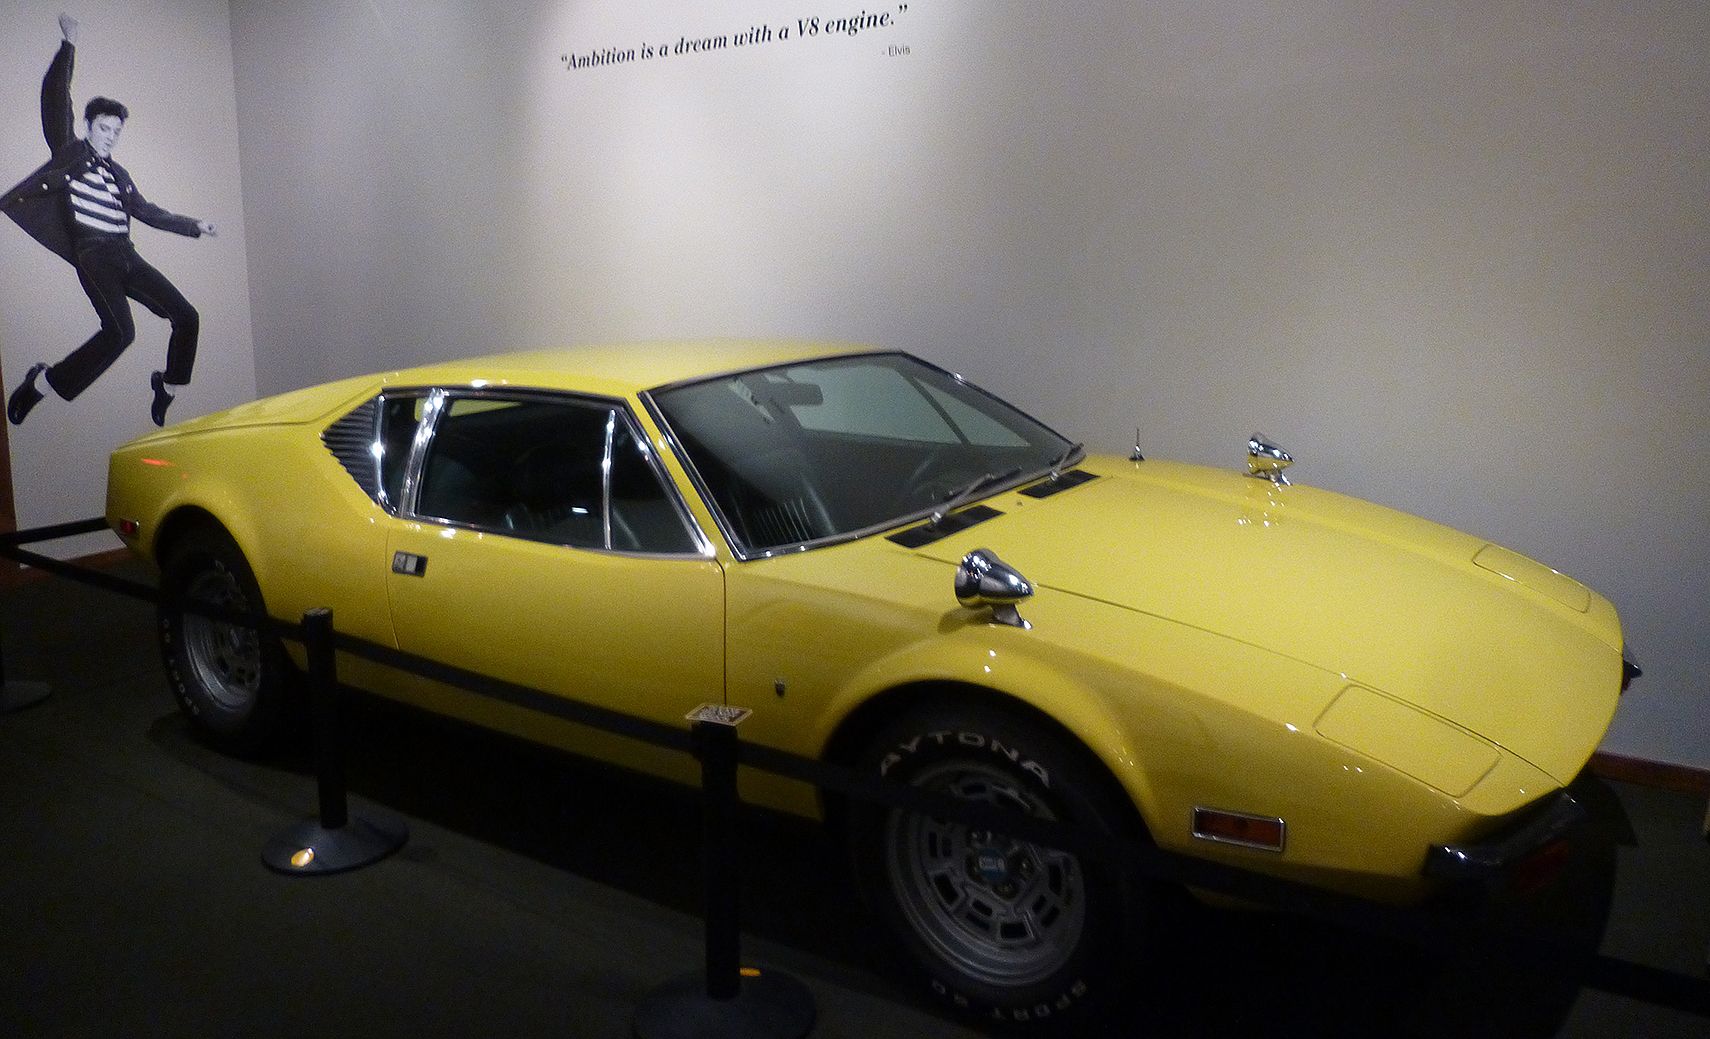 1971 De Tomaso Pantera: The Car That Got Elvis Mad